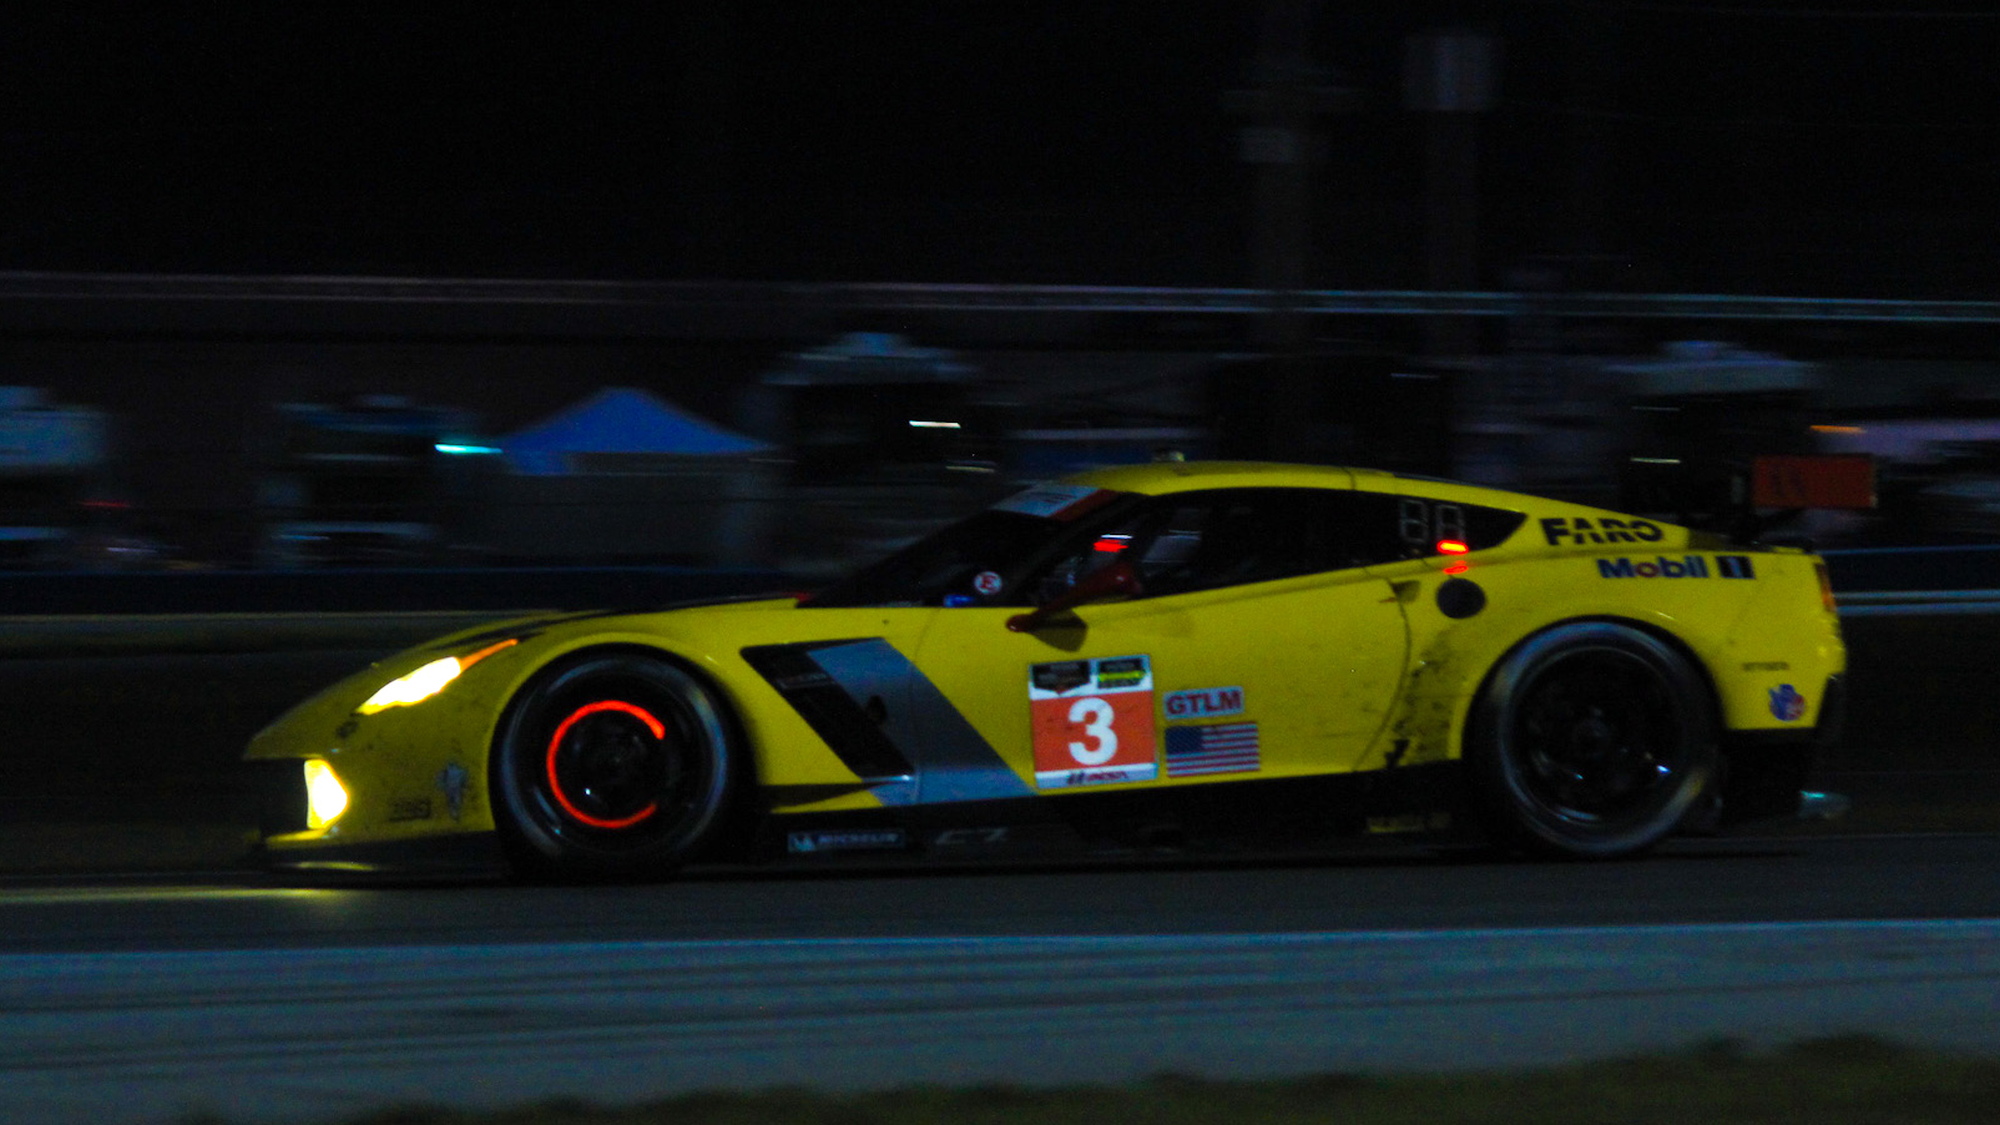 The 2014 Rolex 24 at Daytona at night